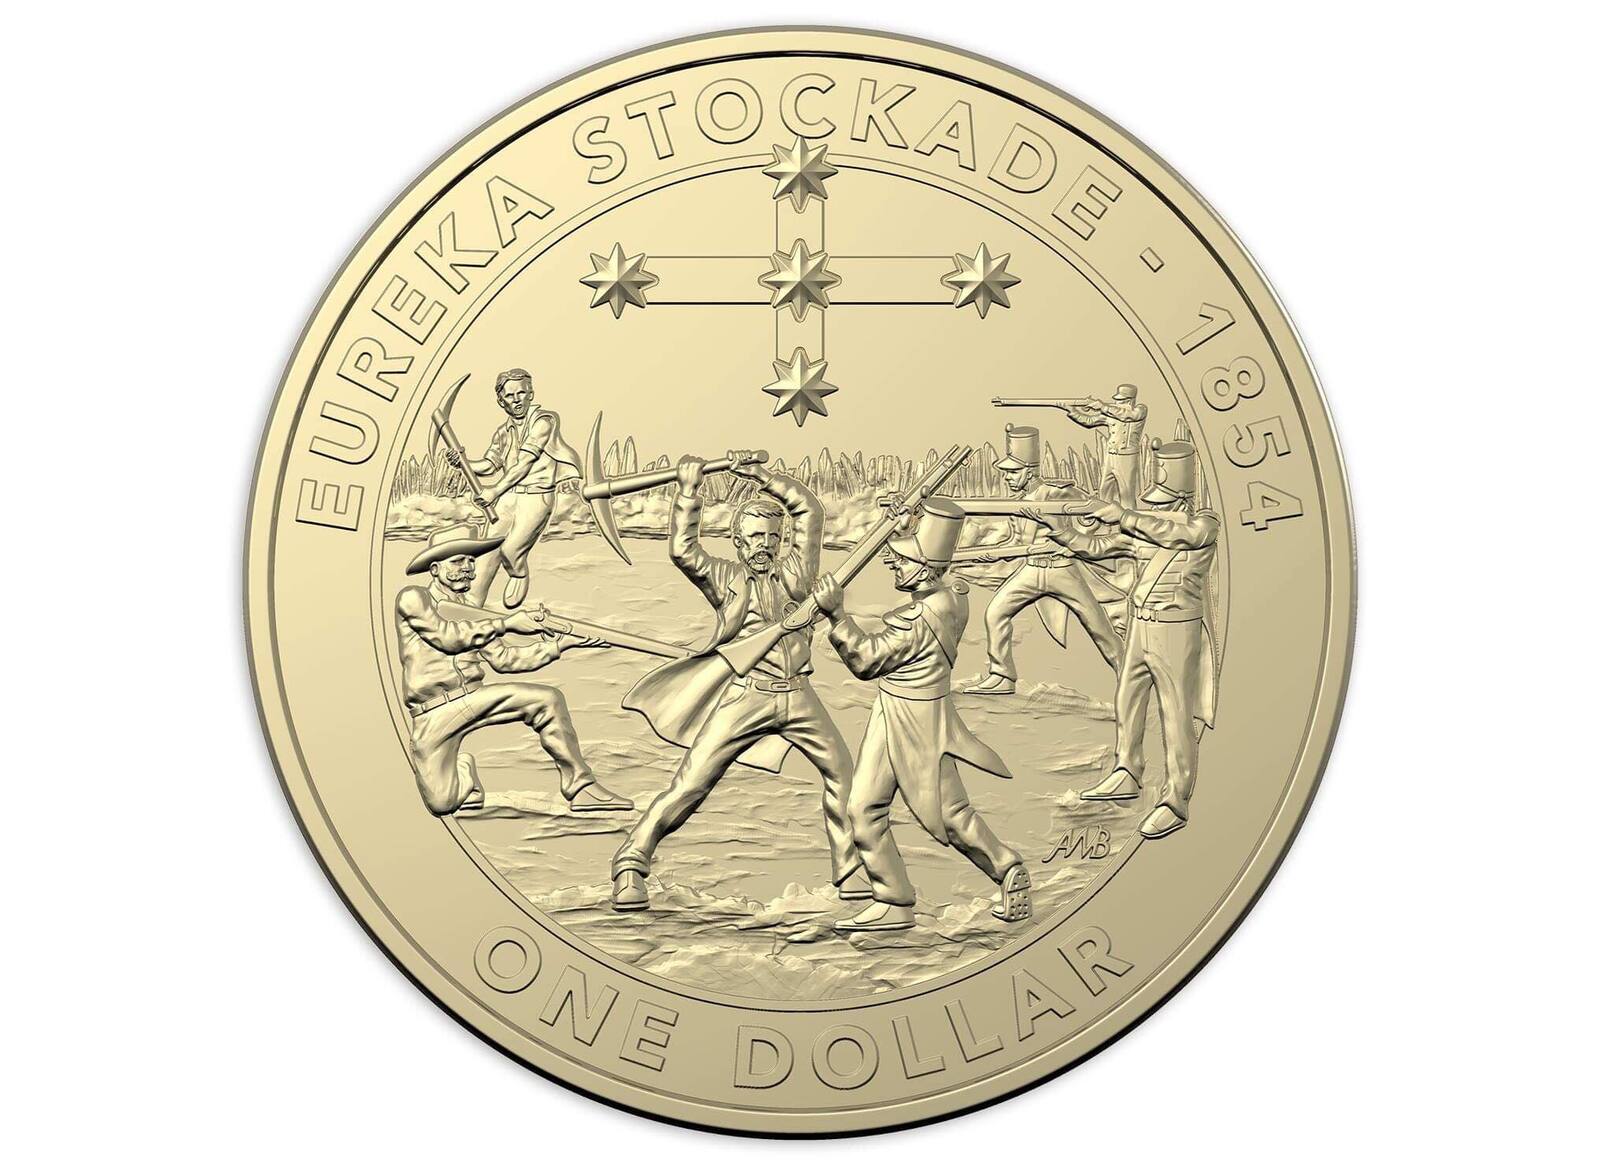 2019 $1 Eureka Stockade 1854 Uncirculated Coin